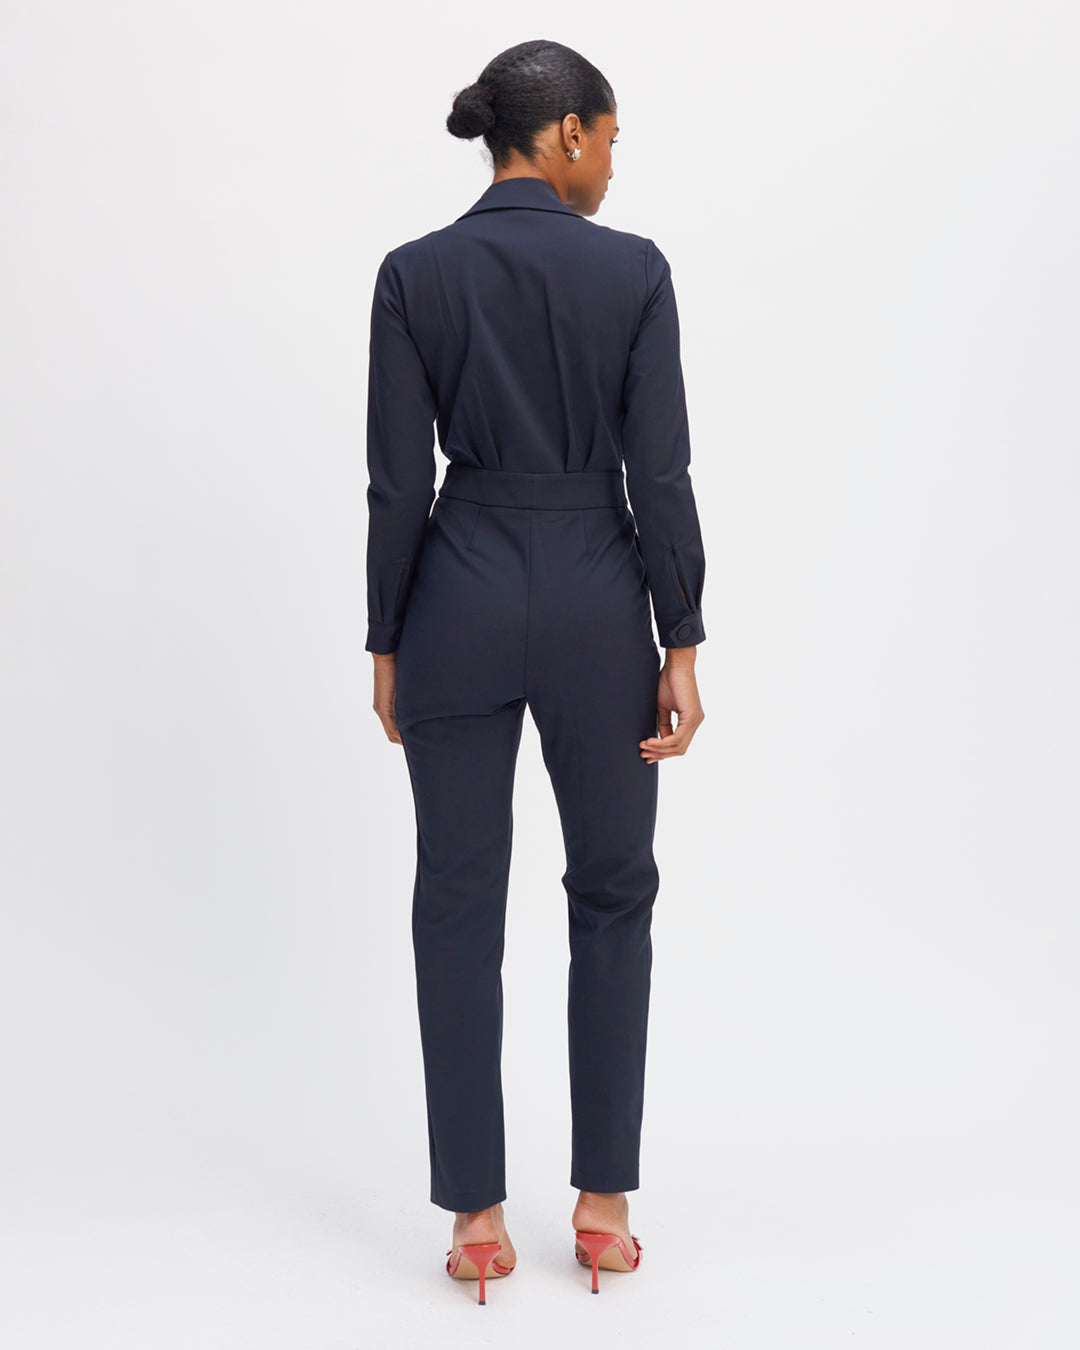 Navy-blue jumpsuit-suit-collar-suit-Material-very-comfortable-Button-on-button-on-belt-Marked-waist-cut-very-flattering-Light-feminine-decollete-17H10-suits-for-women-paris-